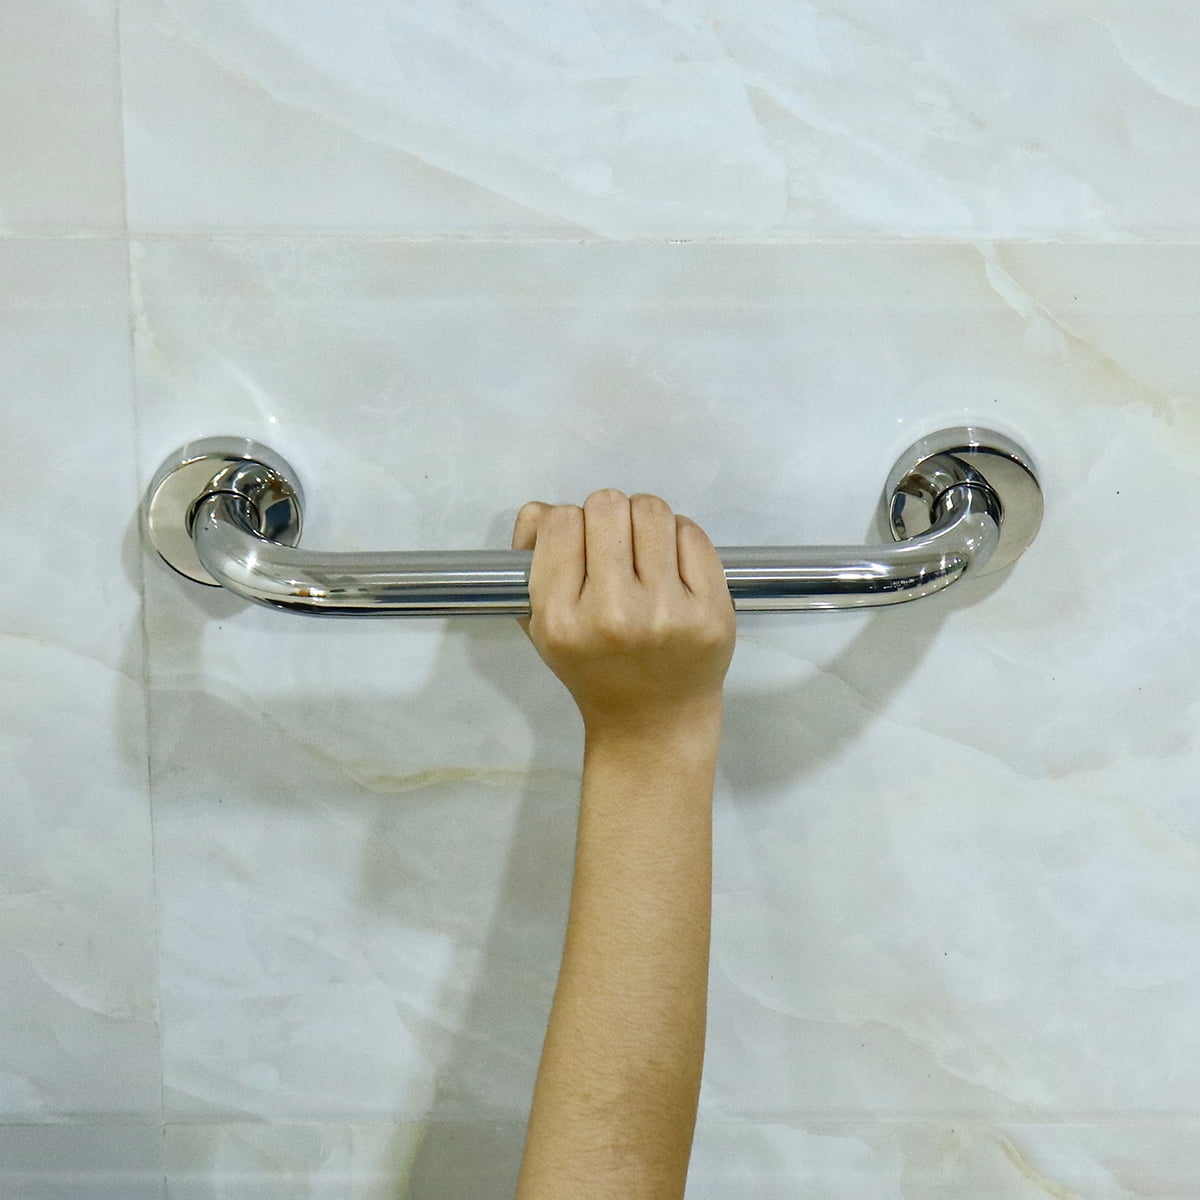 Bathtub Shower Bathroom Safety Grab Bars Anti-skid Handles for Handicap